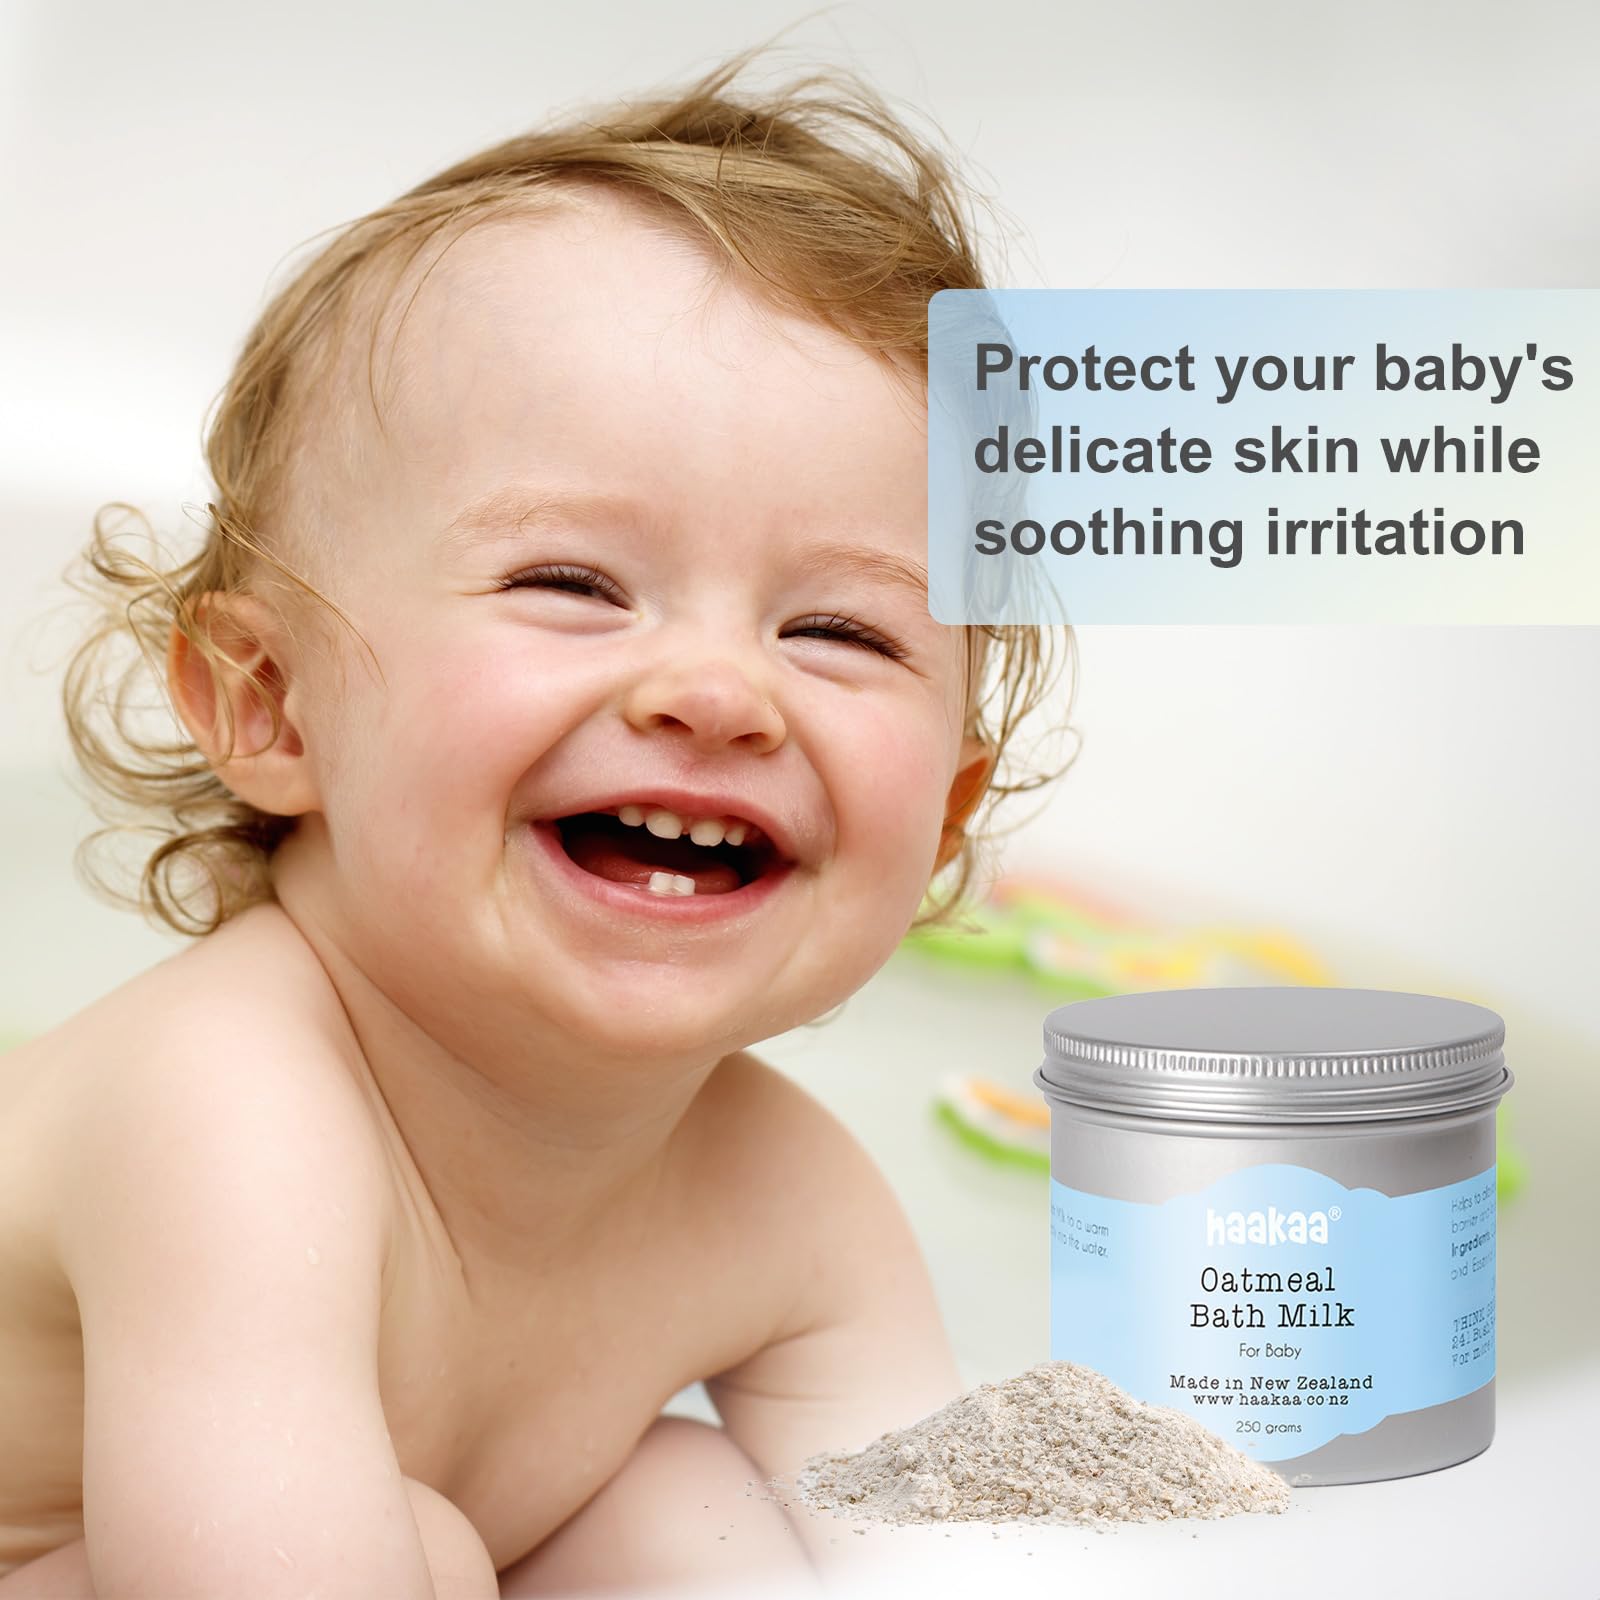 haakaa 360° Silicone Baby Toothbrush and Oatmeal Baby Bath Milk Set